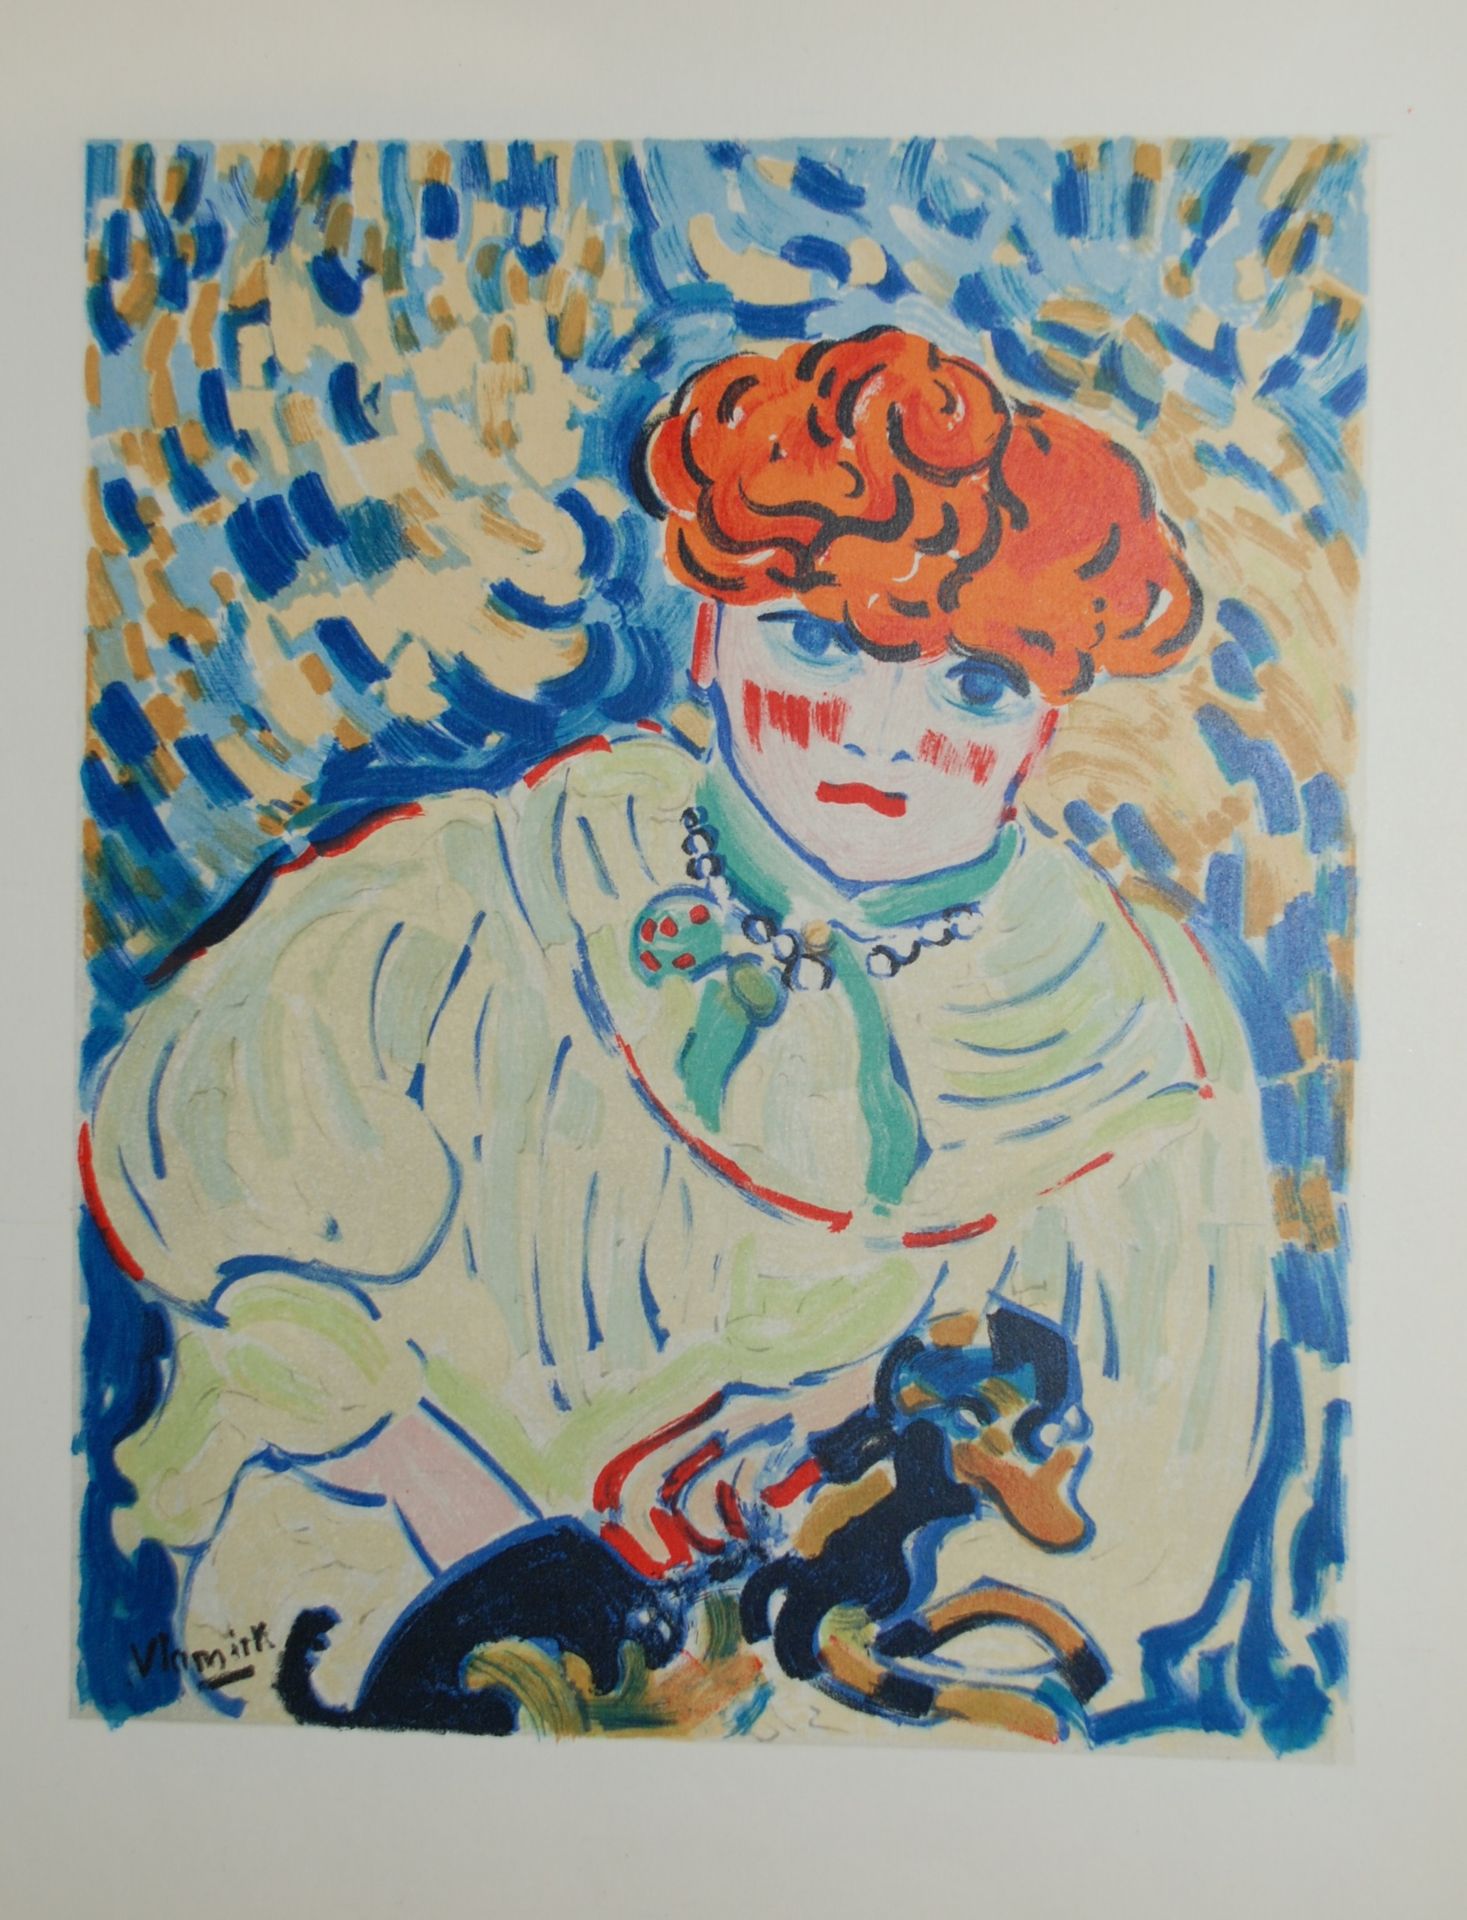 MAURICE DE VLAMINCK 莫里斯-德-弗拉明克--带狗的女人

Charles Sorlier的15色石版画

板块中的签名

限量发行2000册&hellip;